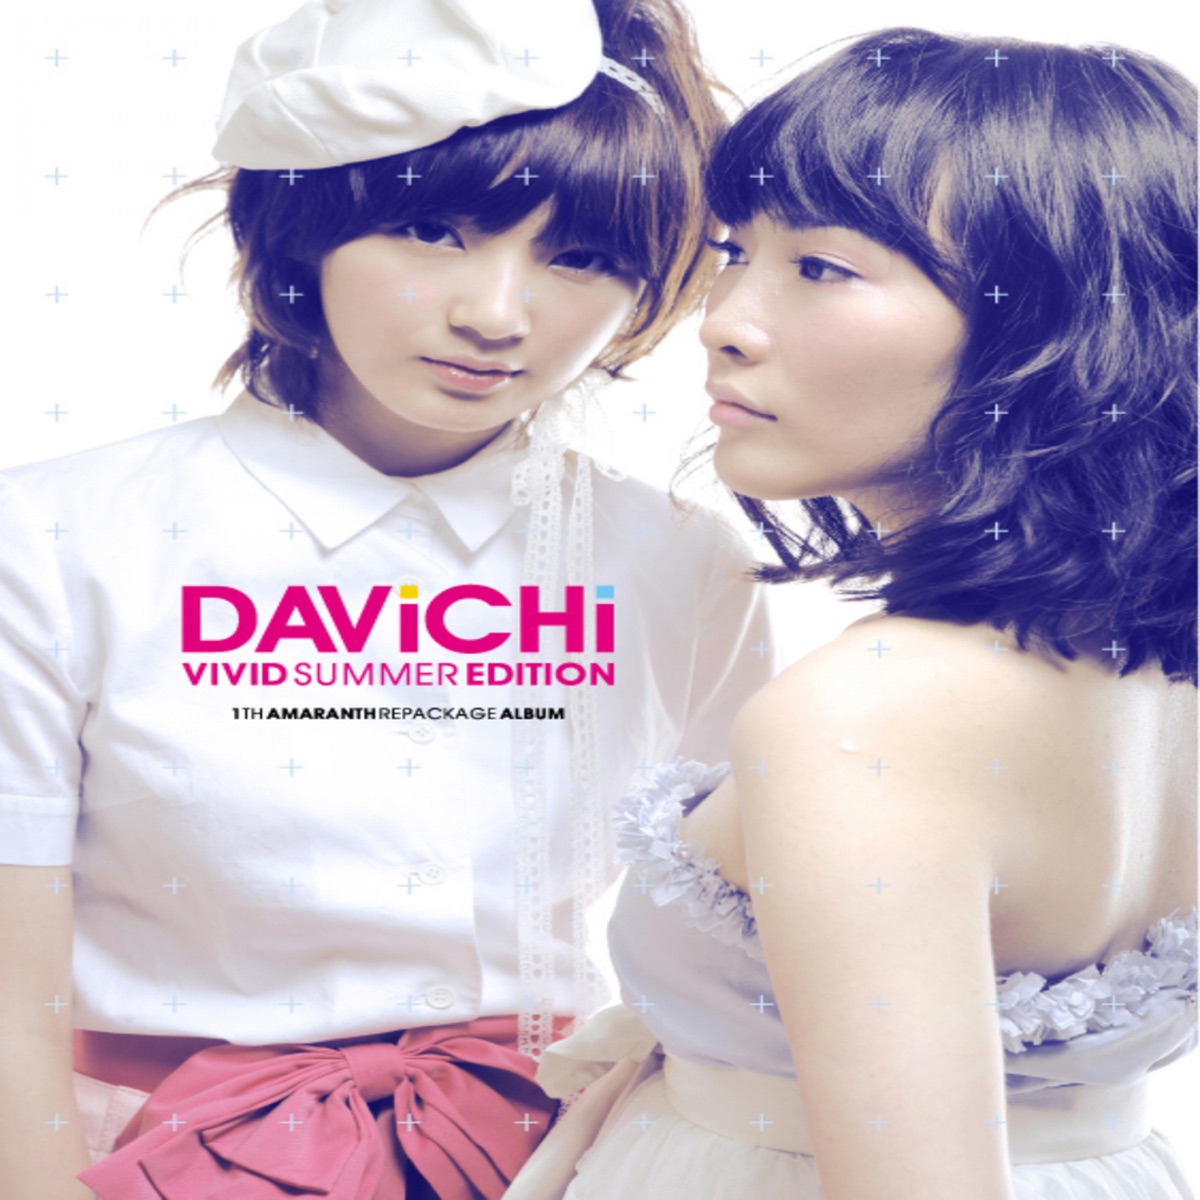 Davichi – Vivid Summer Edition (1st Amaranth Repackage Album)